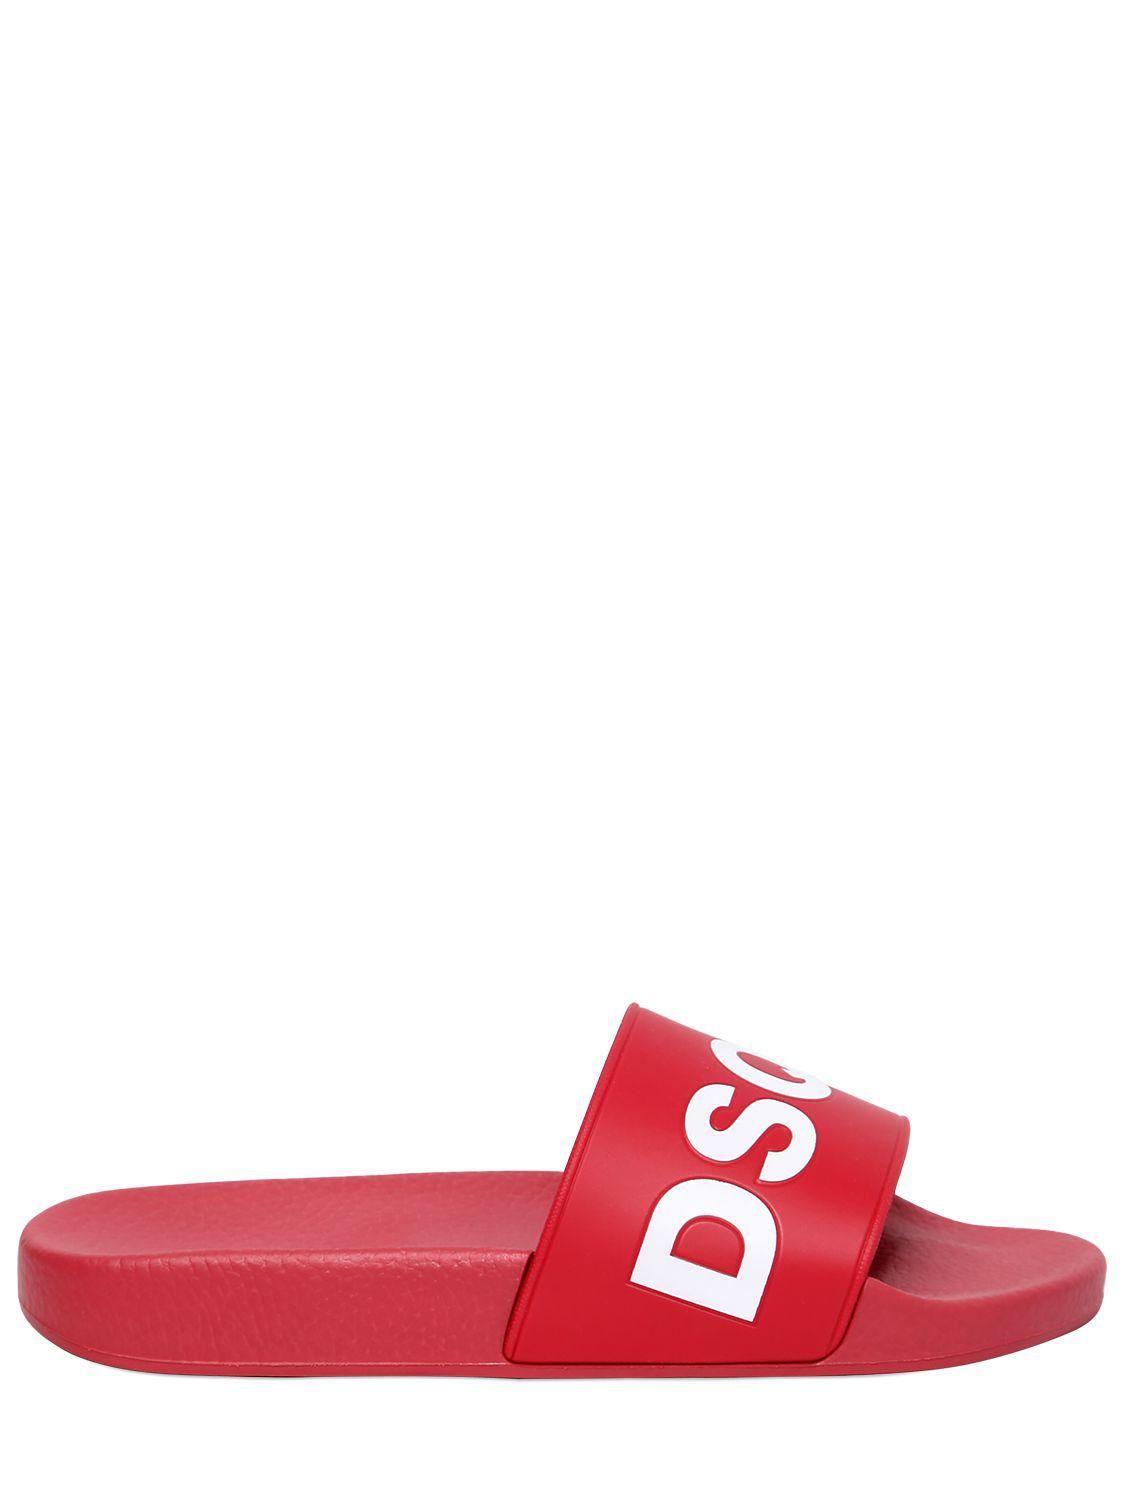 Dune Logo - DSquared² Dune Logo Rubber Slide Sandals in Red